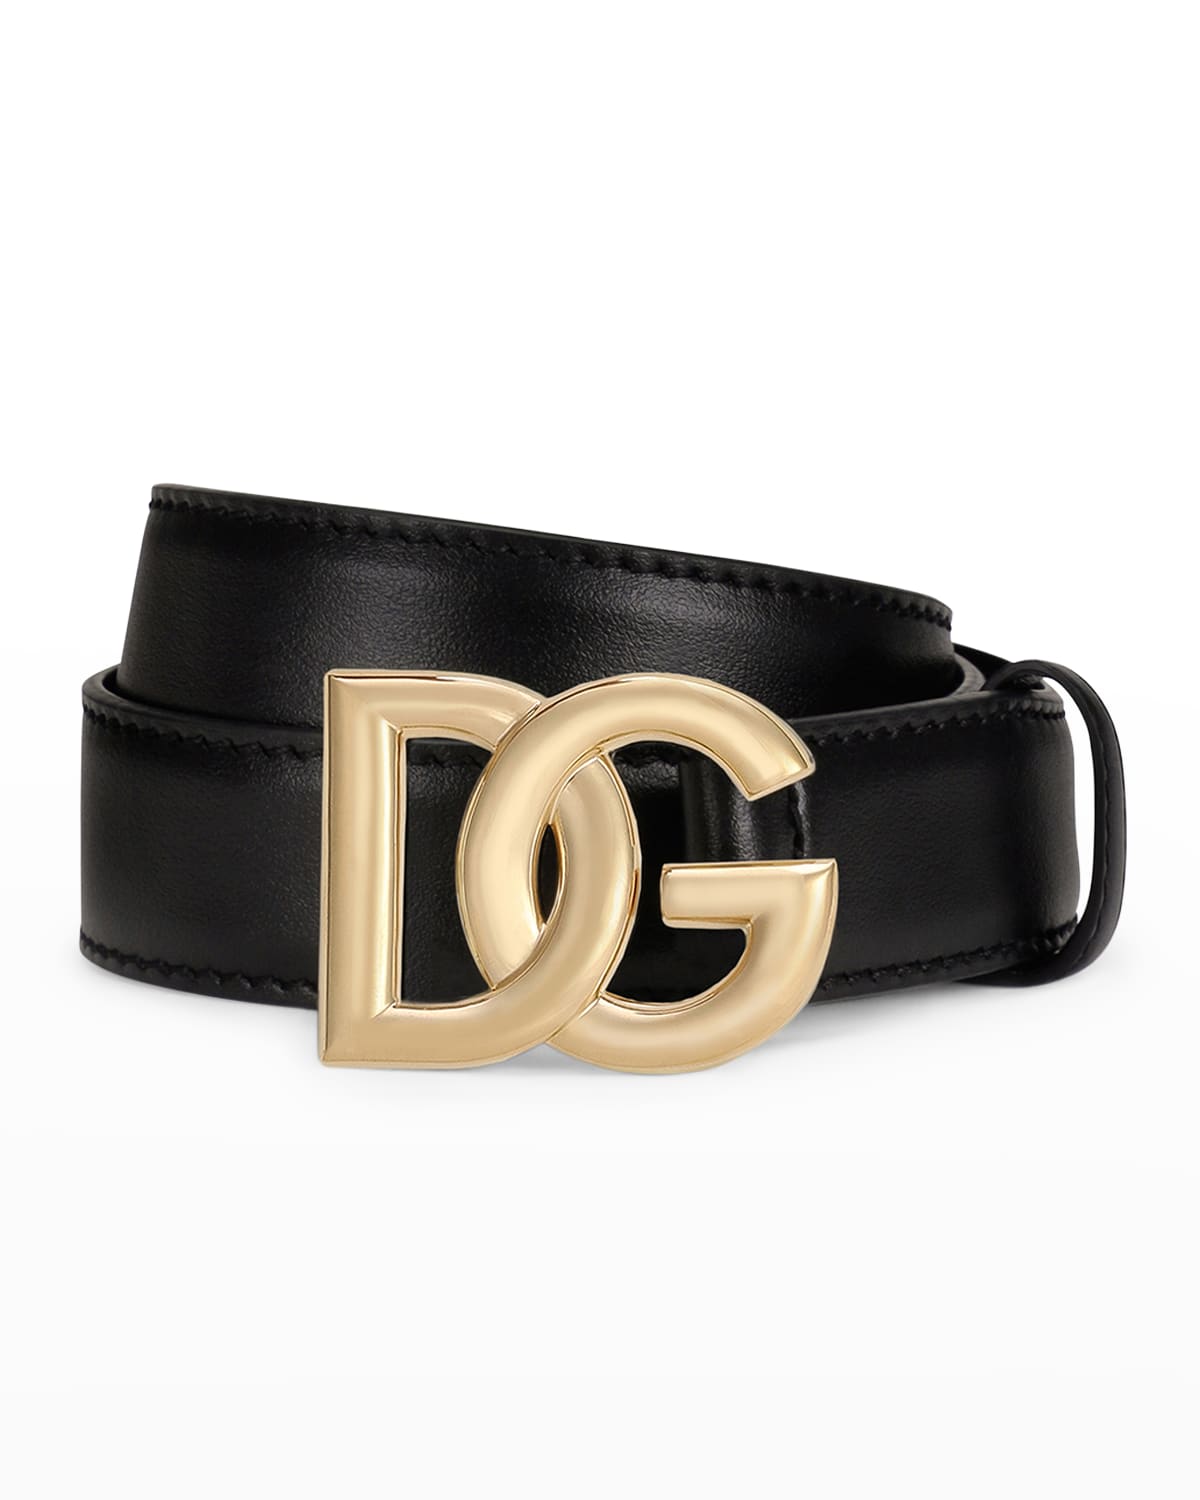 Dolce&Gabbana Golden Interlocking DG Patent Leather Belt | Neiman Marcus